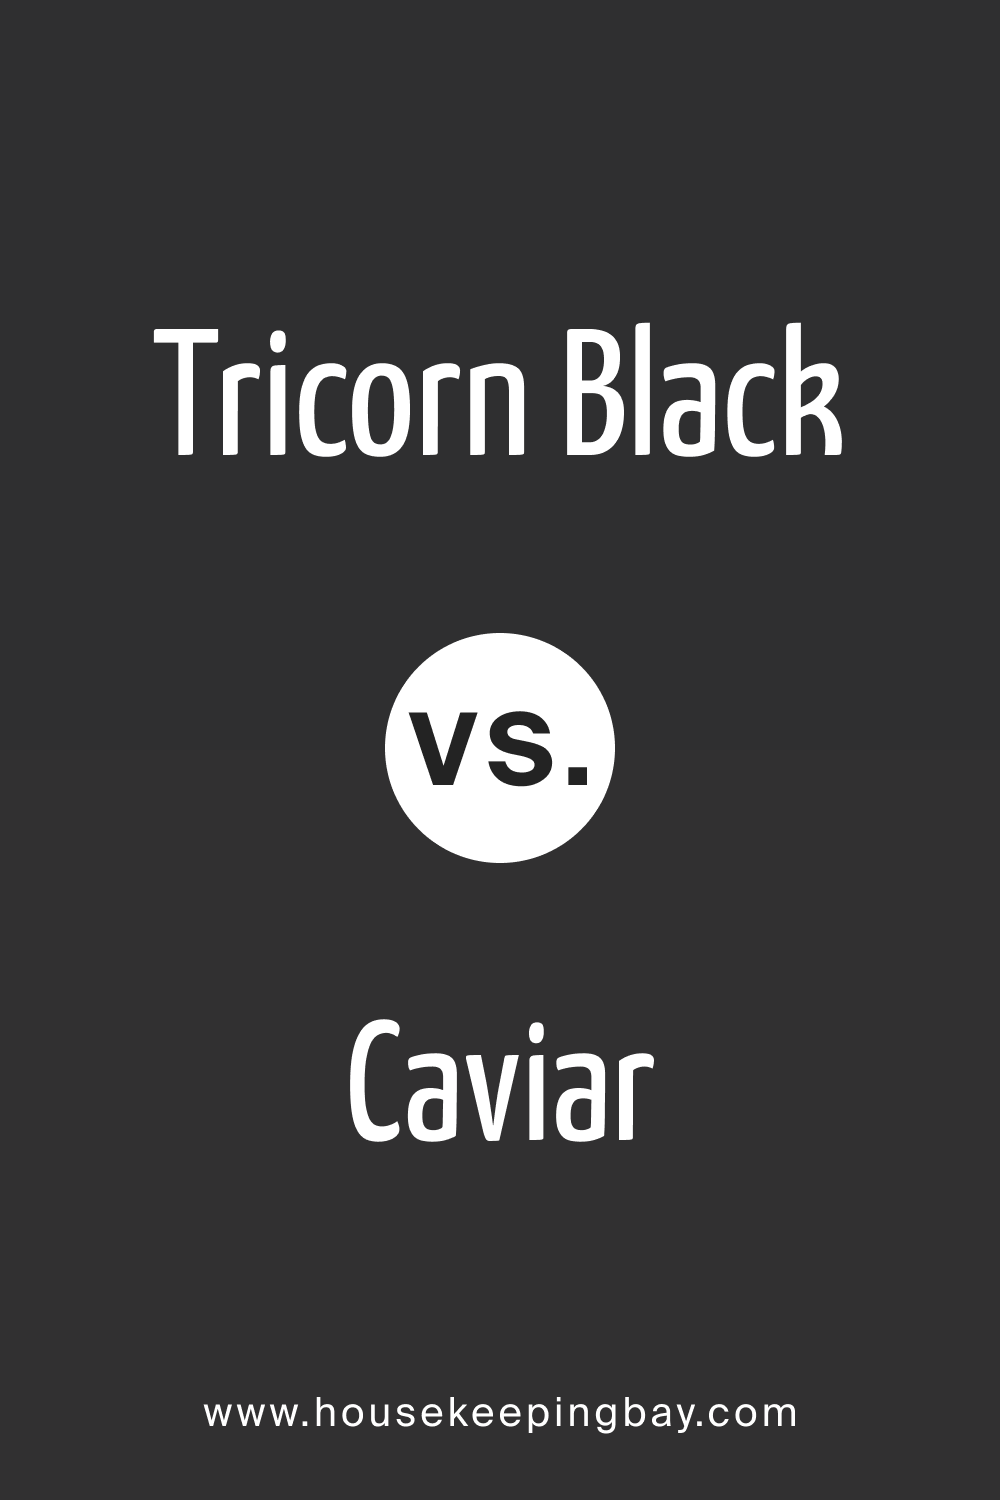 Tricorn Black vs. Caviar